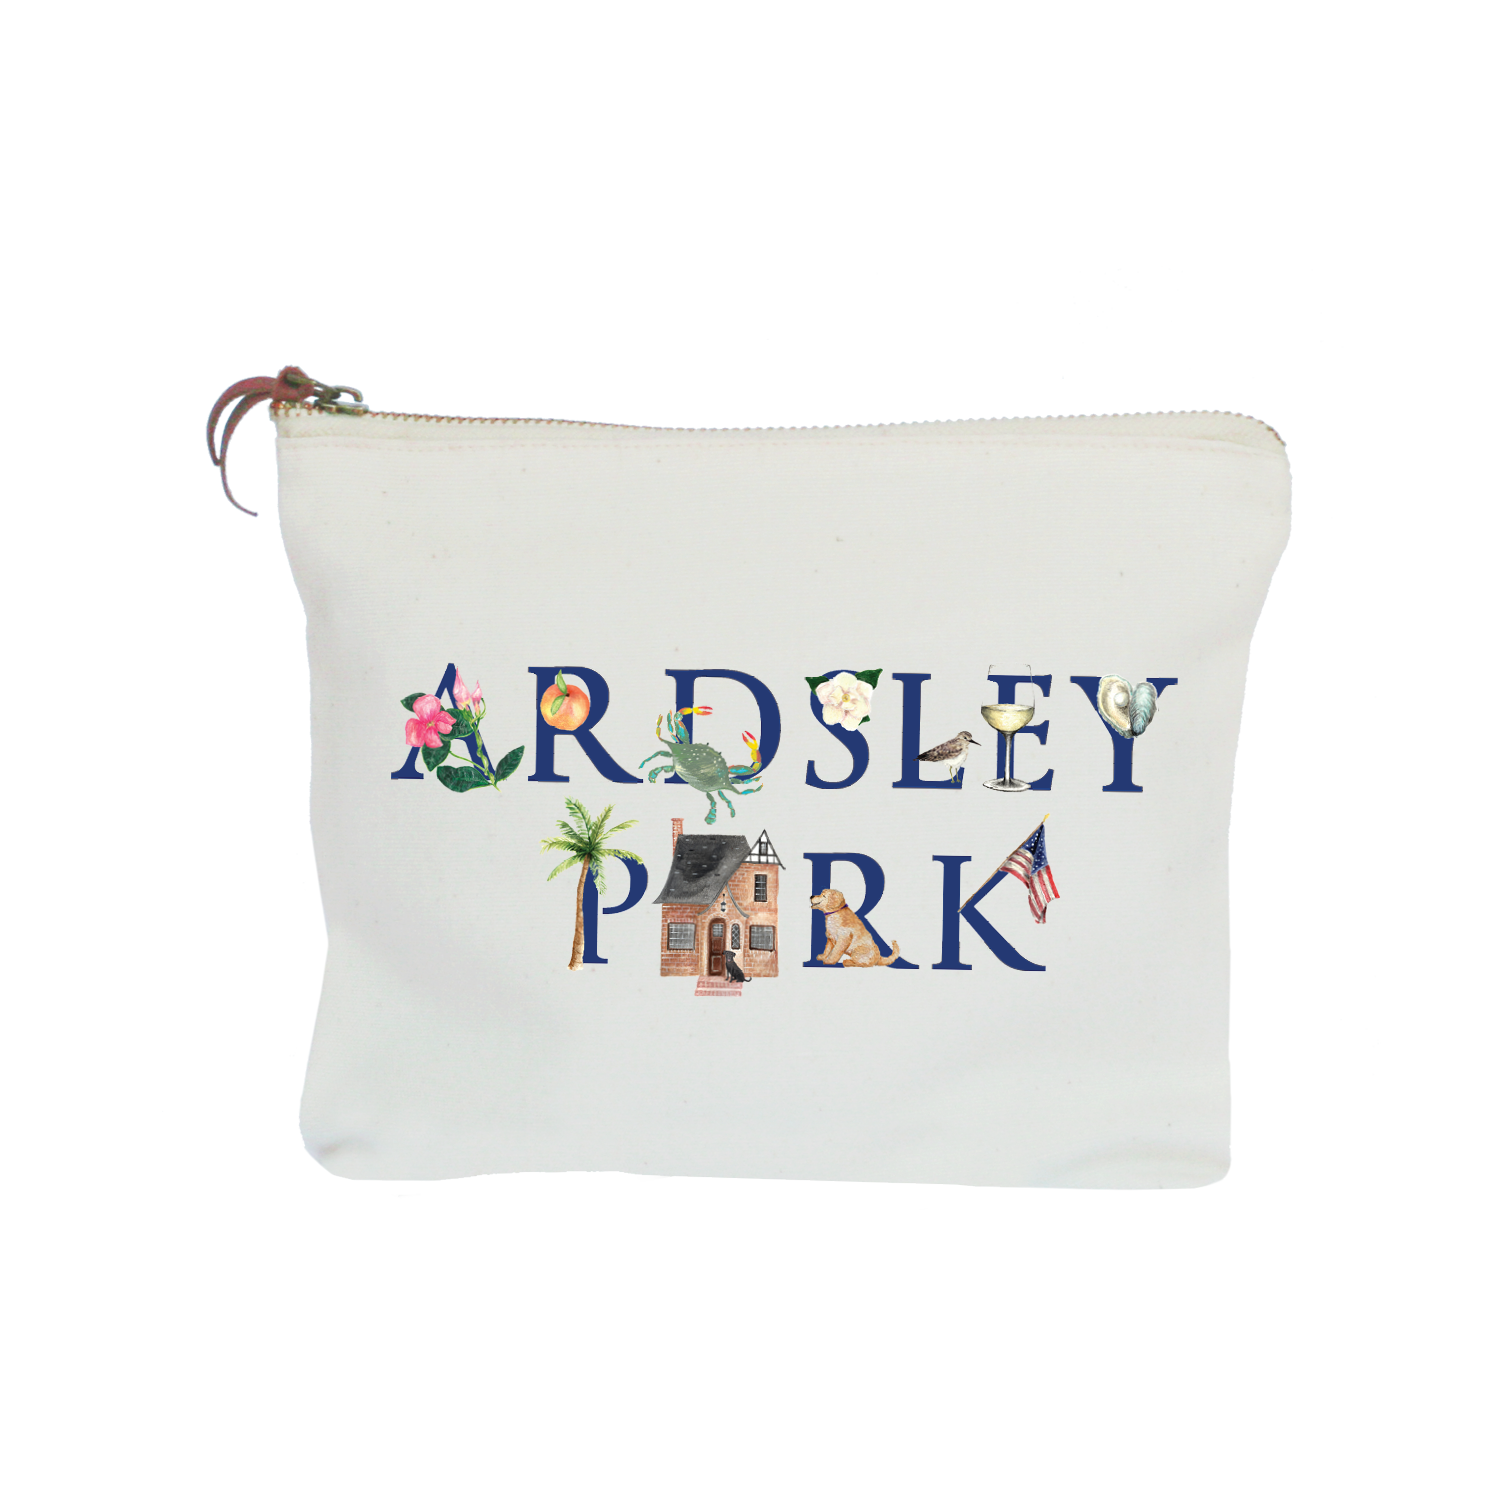 ardsley park zipper pouch